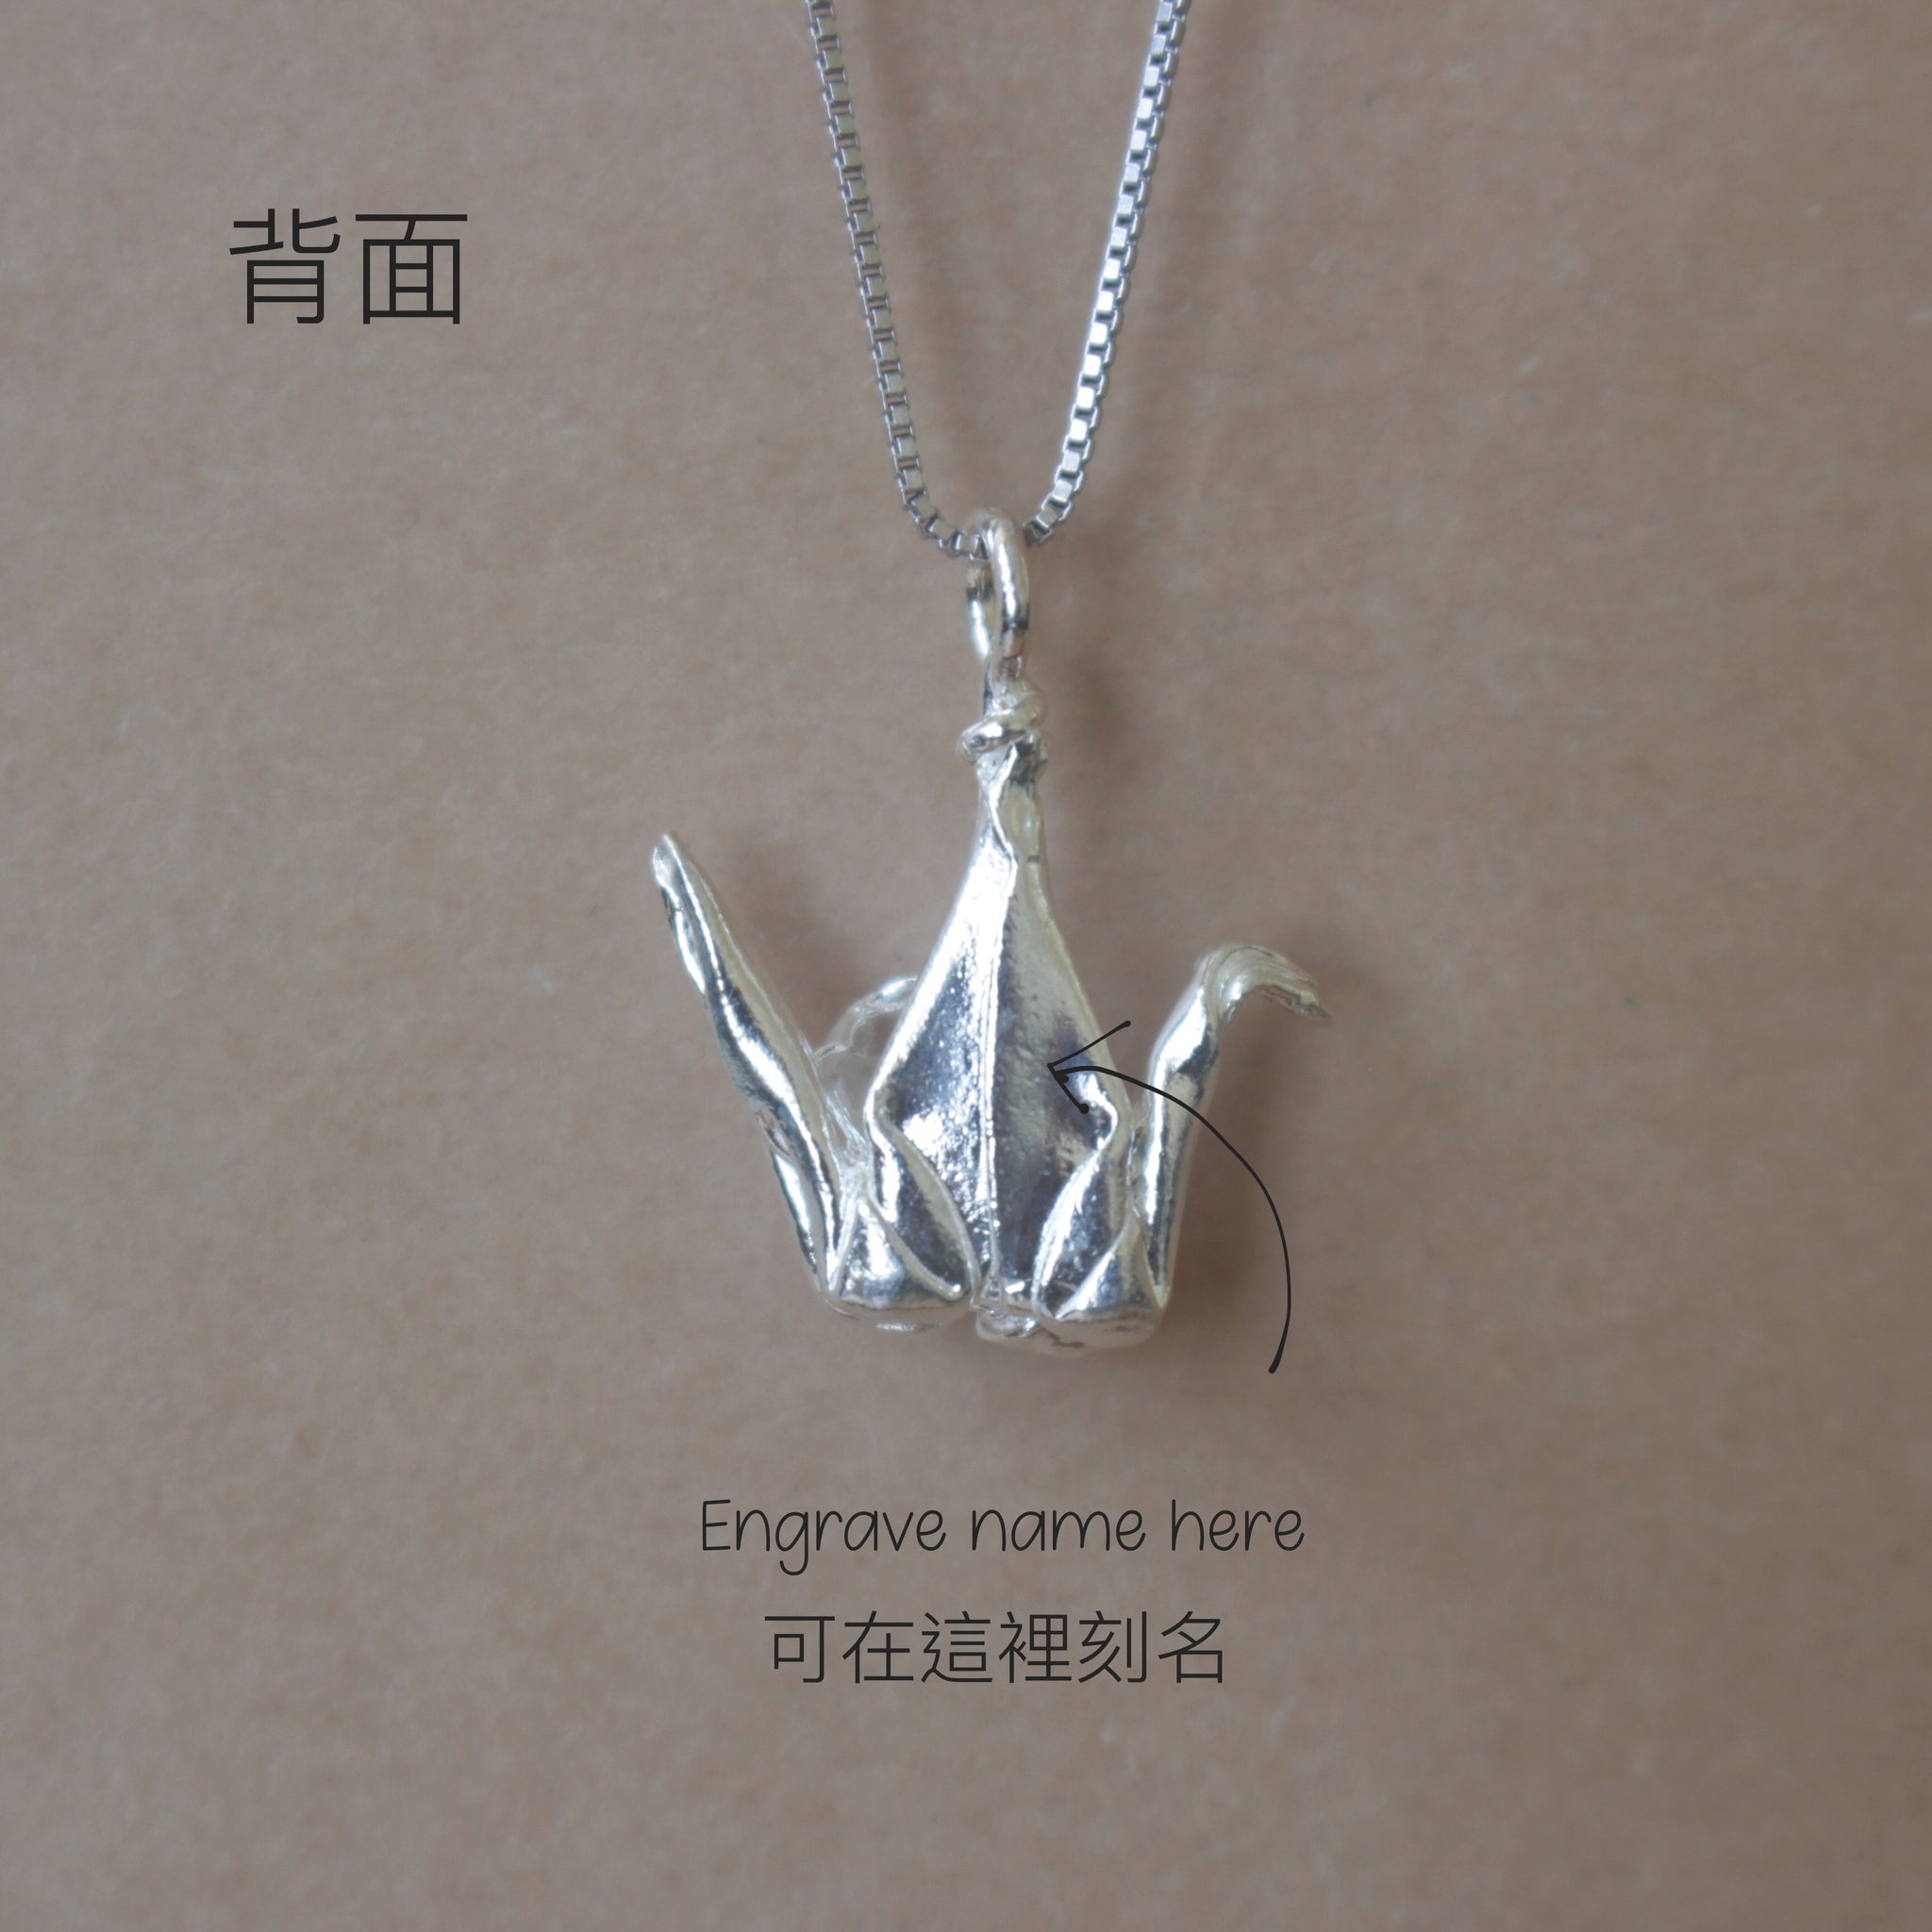 Origami Crane Necklace / Silver Origami Crane Necklace